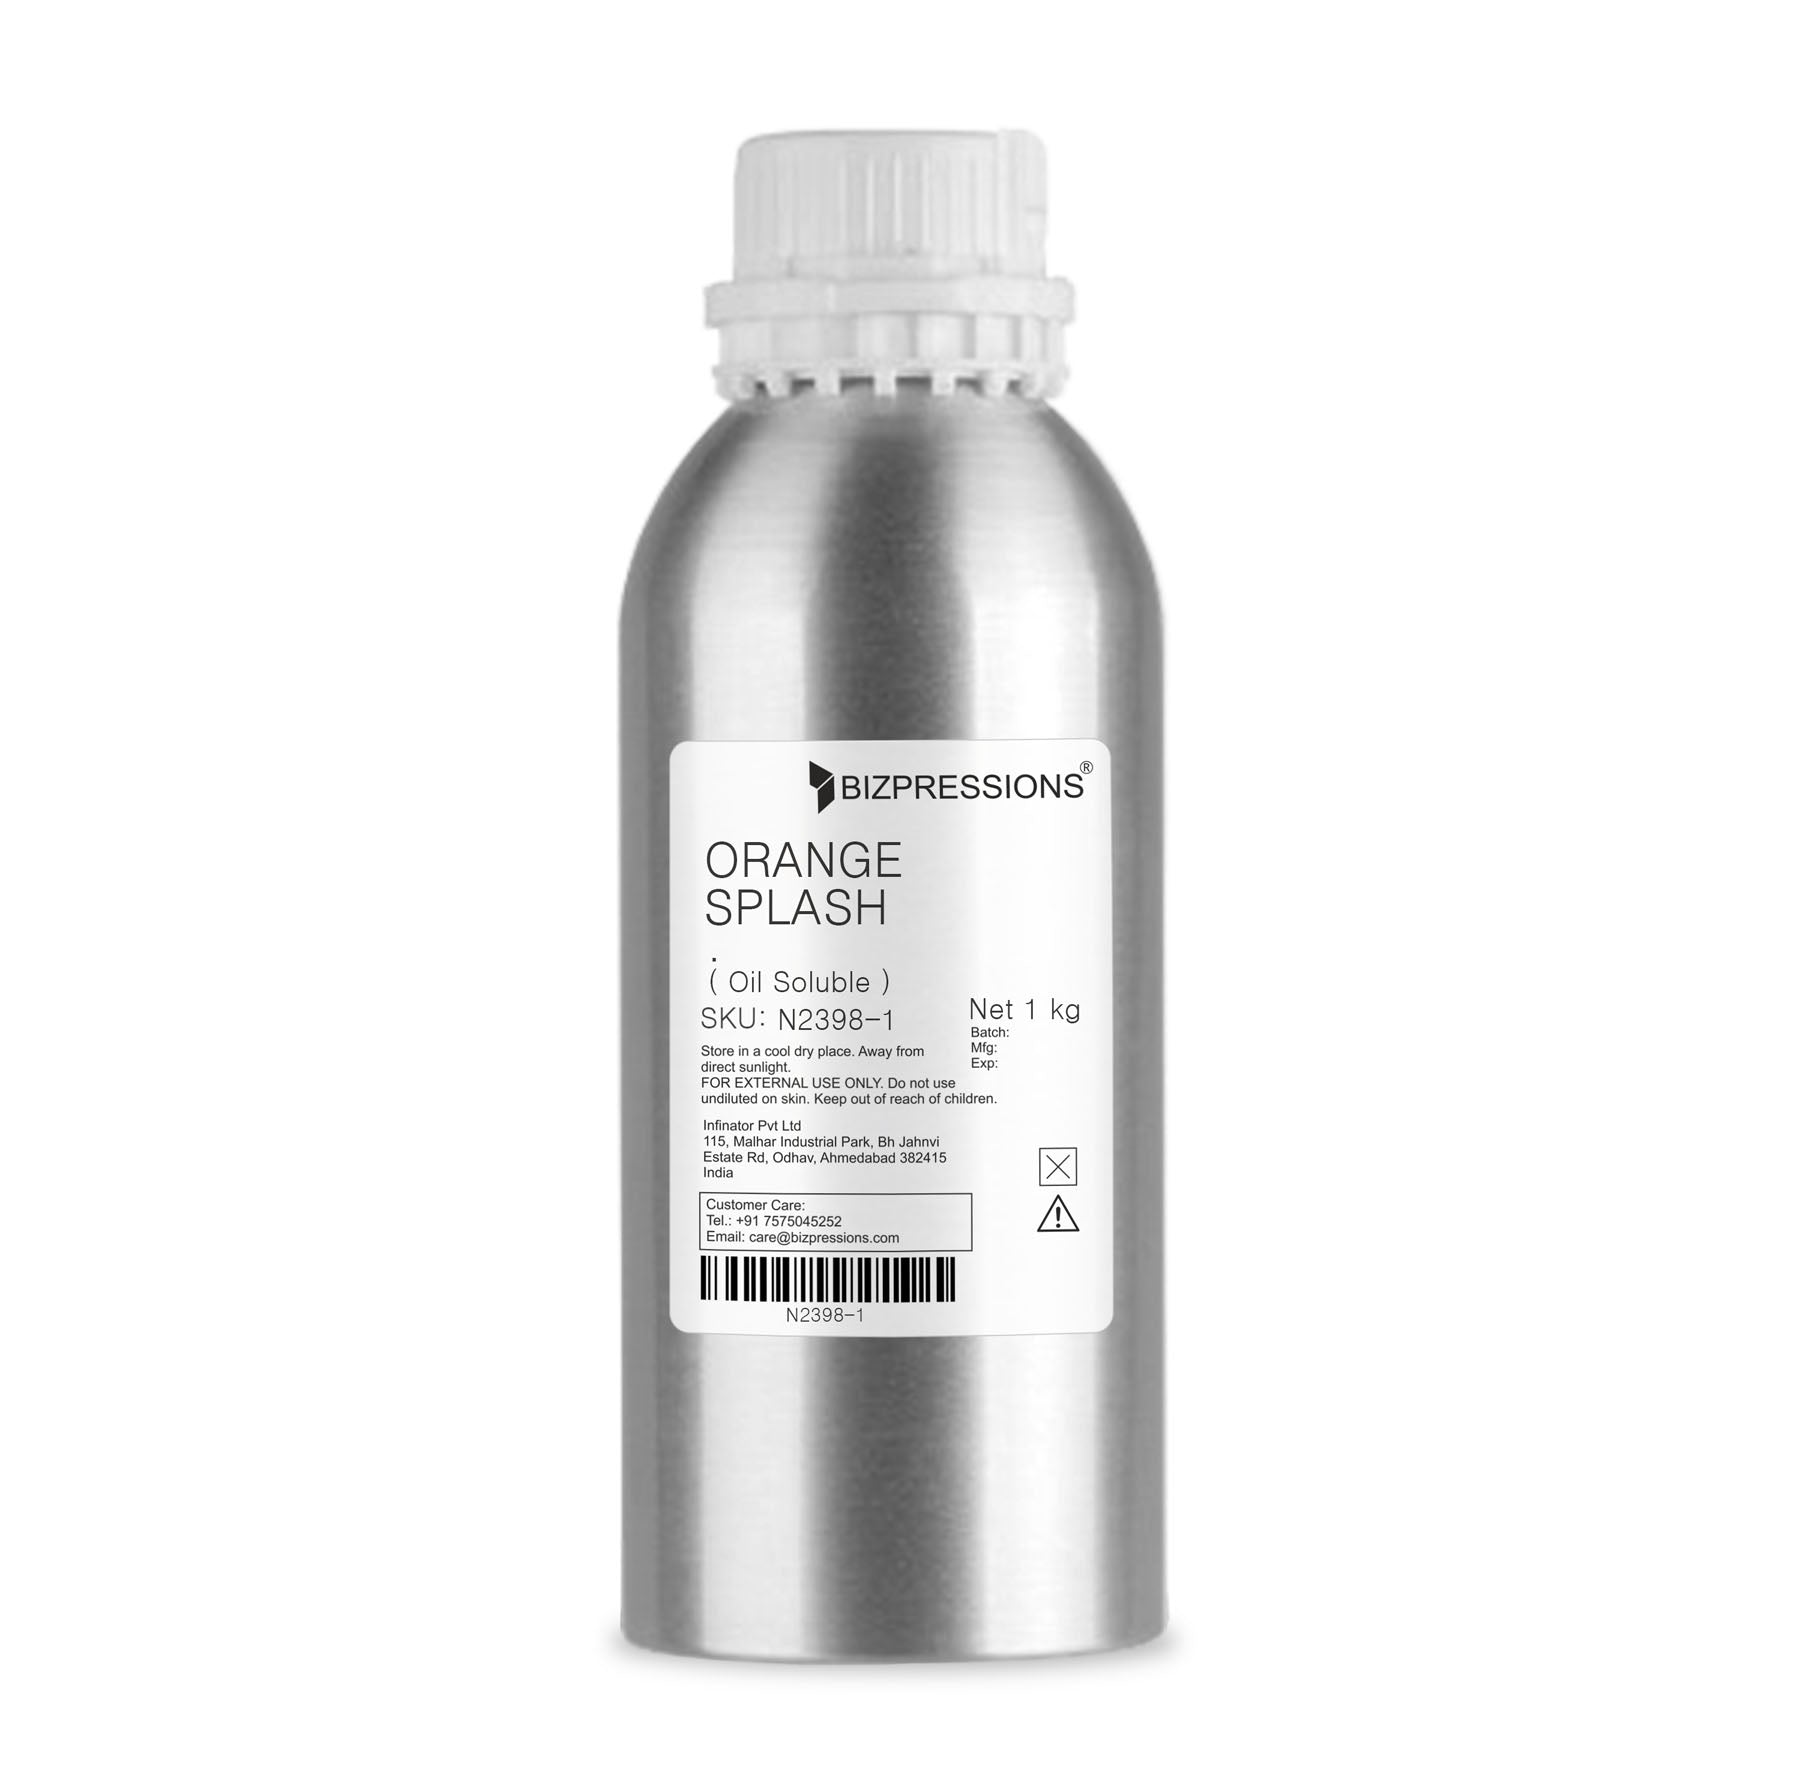 ORANGE SPLASH - Fragrance ( Oil Soluble ) - 1 kg